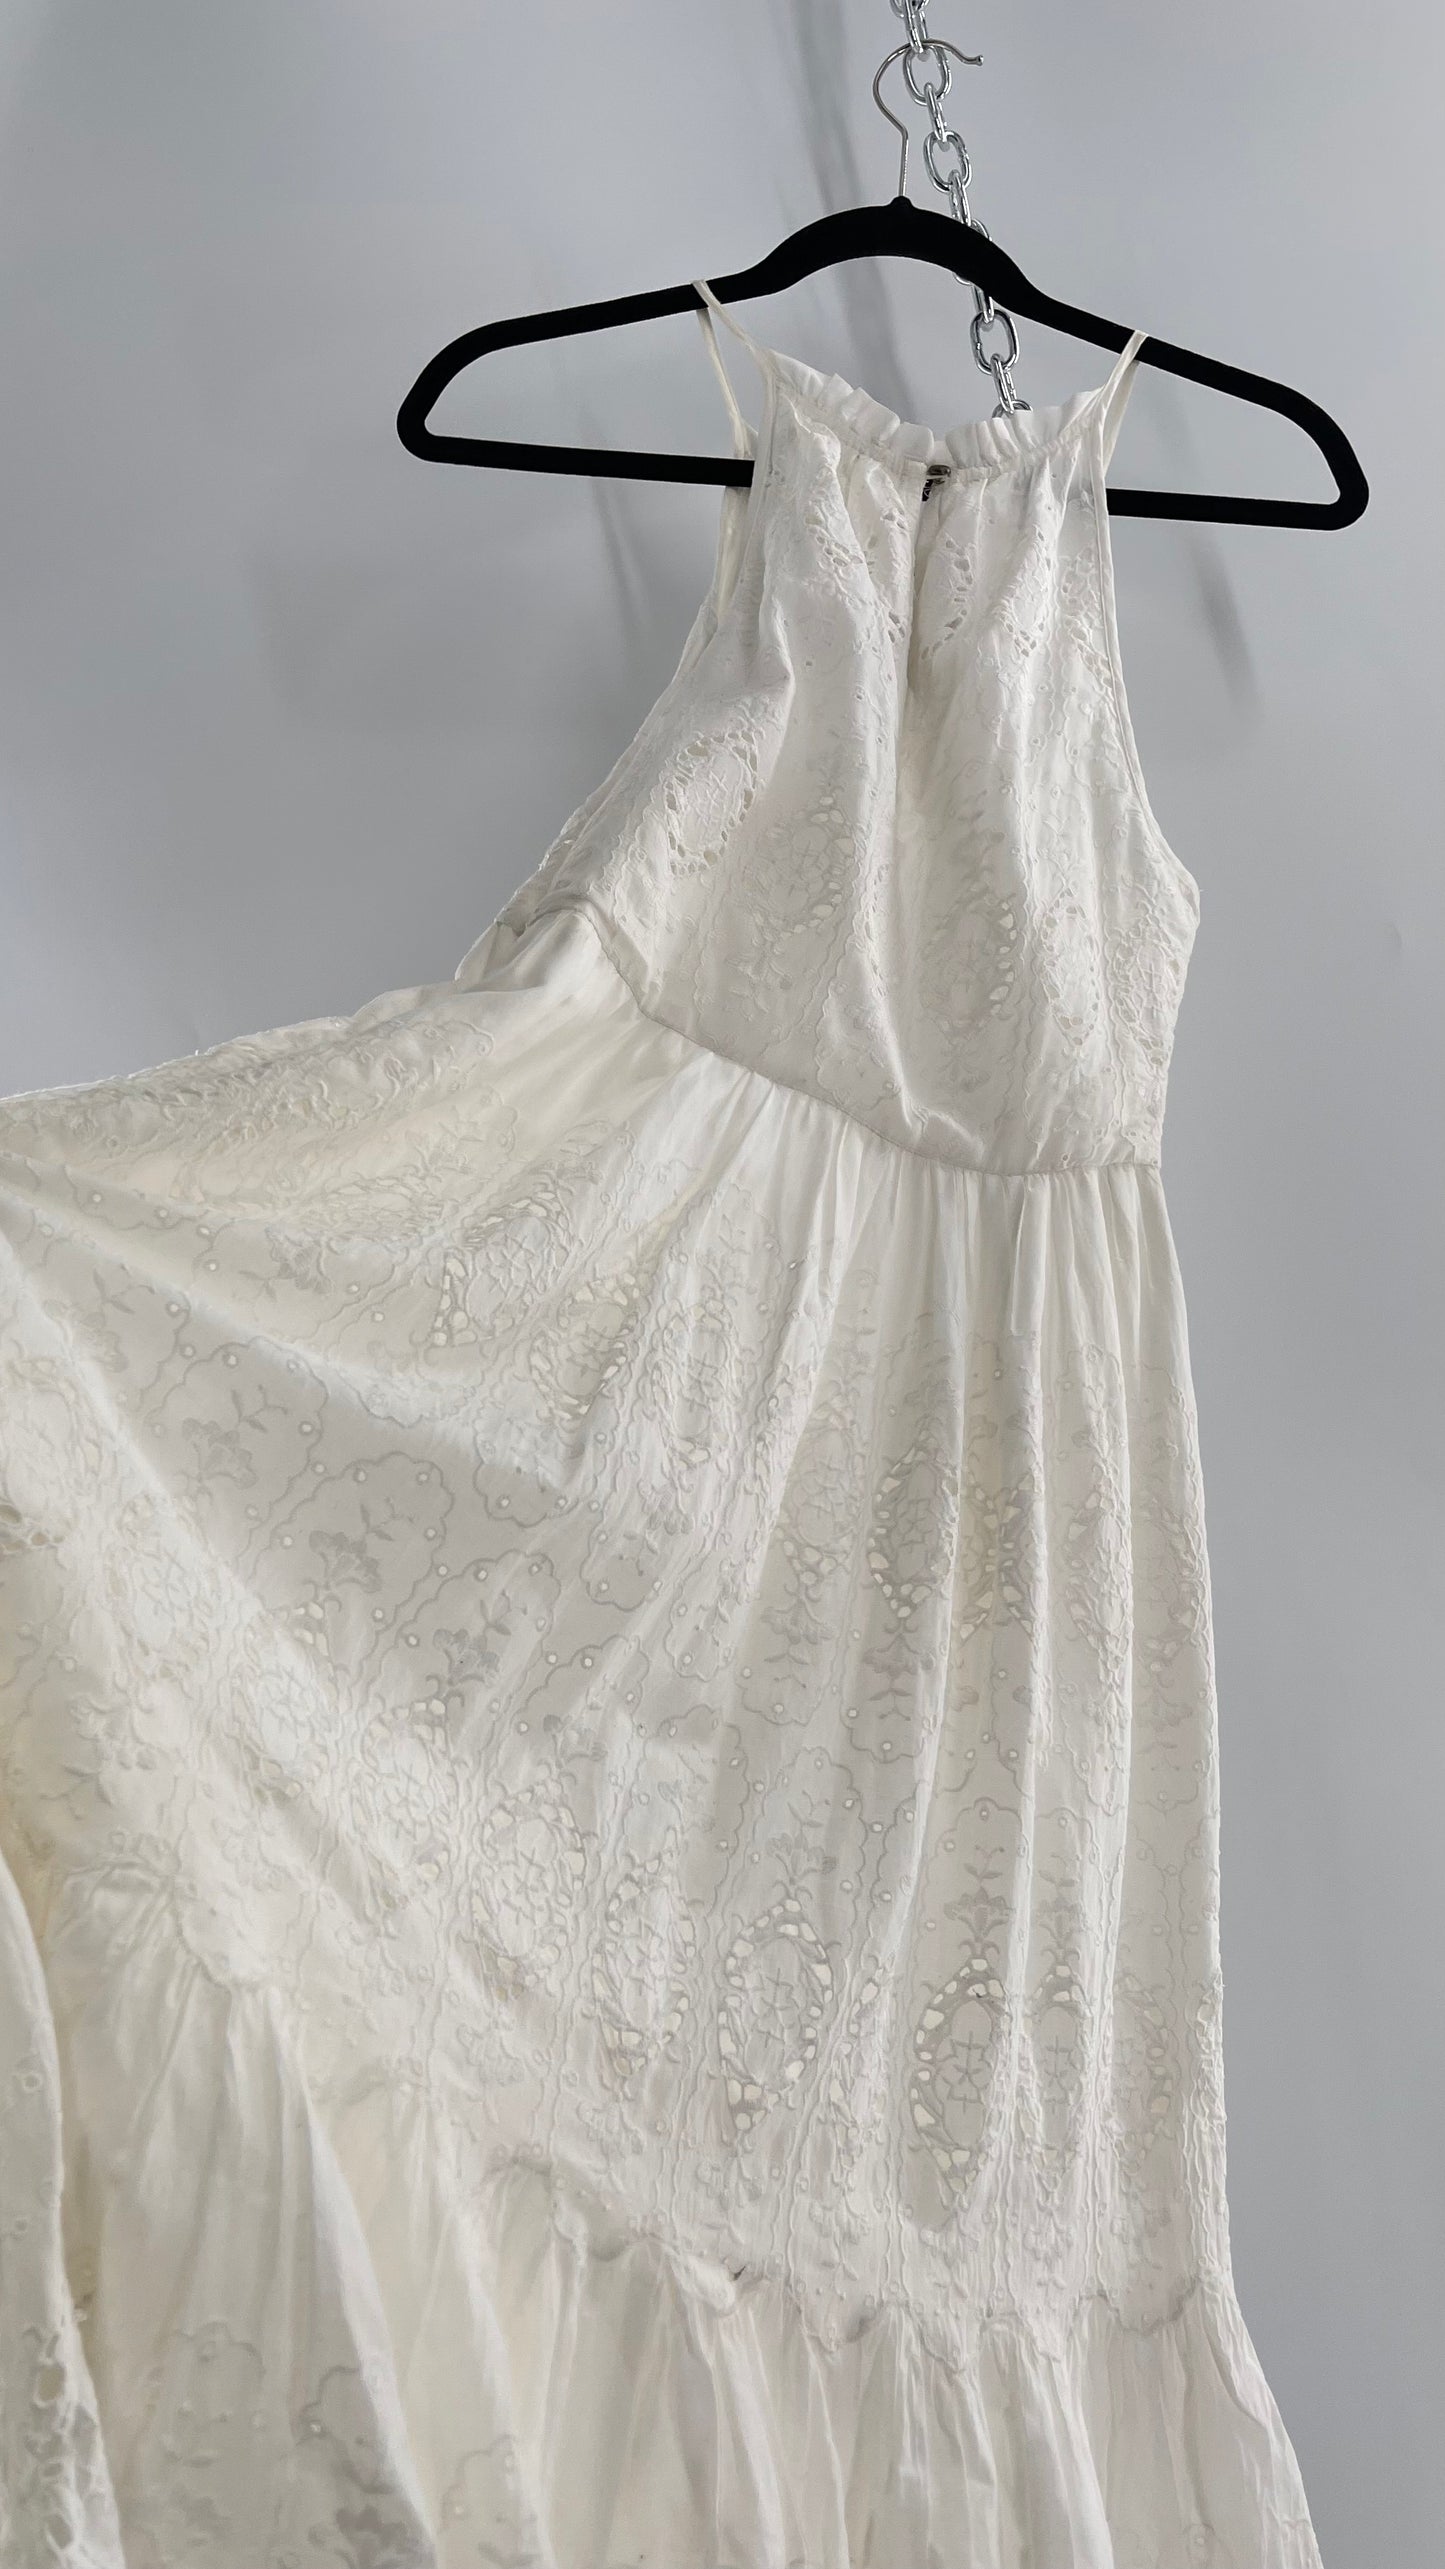 Maeve White Eyelet Tiered Lace Cotton Midi Dress (2)